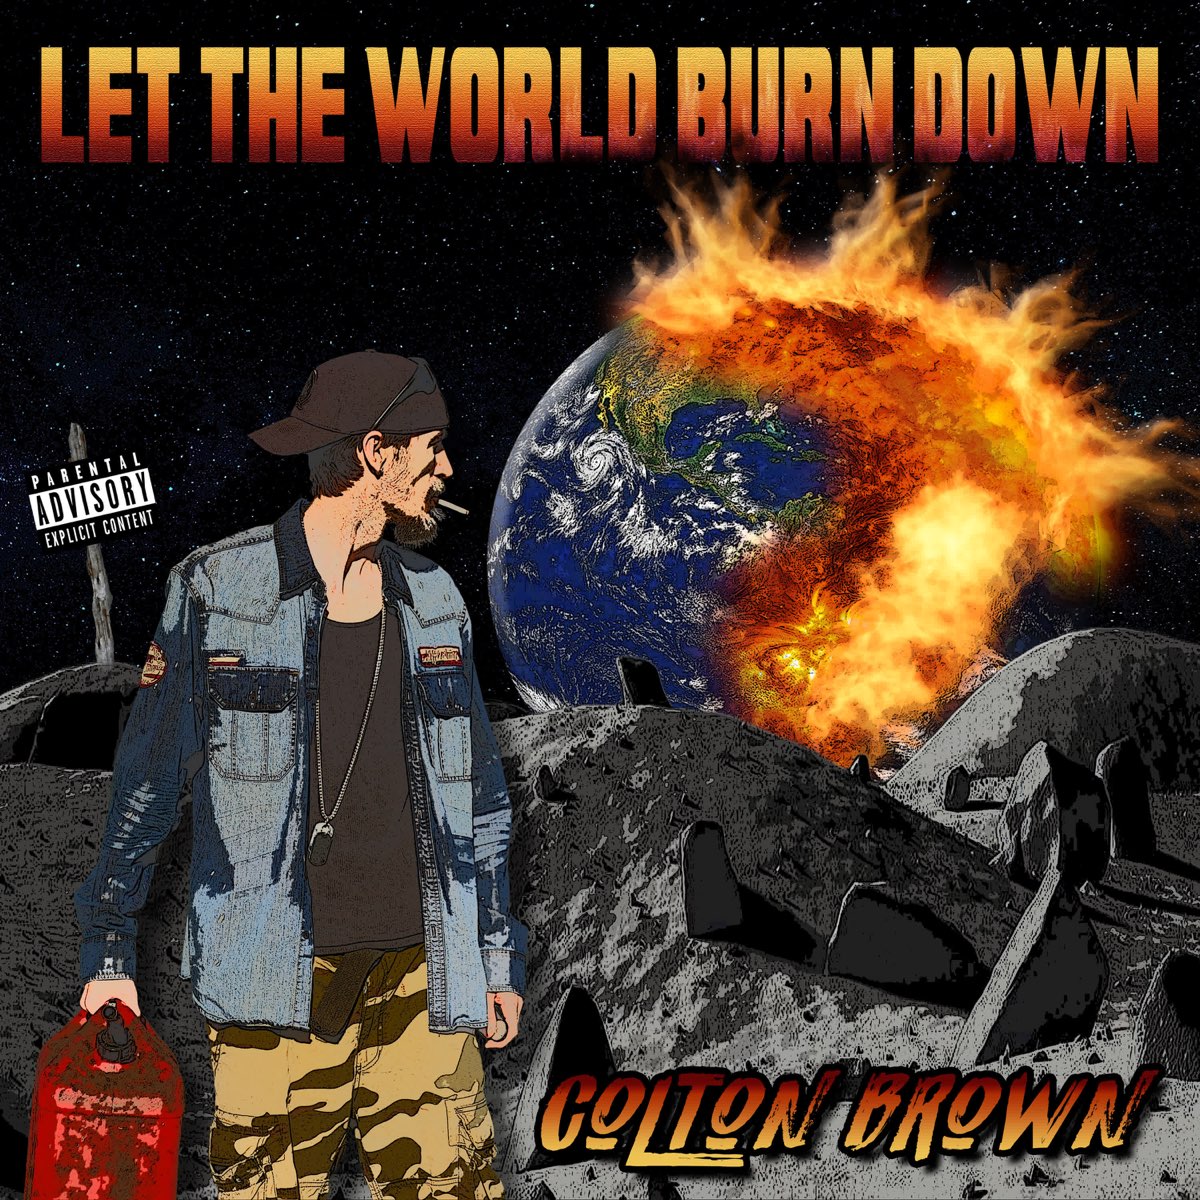 Let the world burn. Колтон Браун. Идеальный Burn down. My World is Burning down. World Burn down.